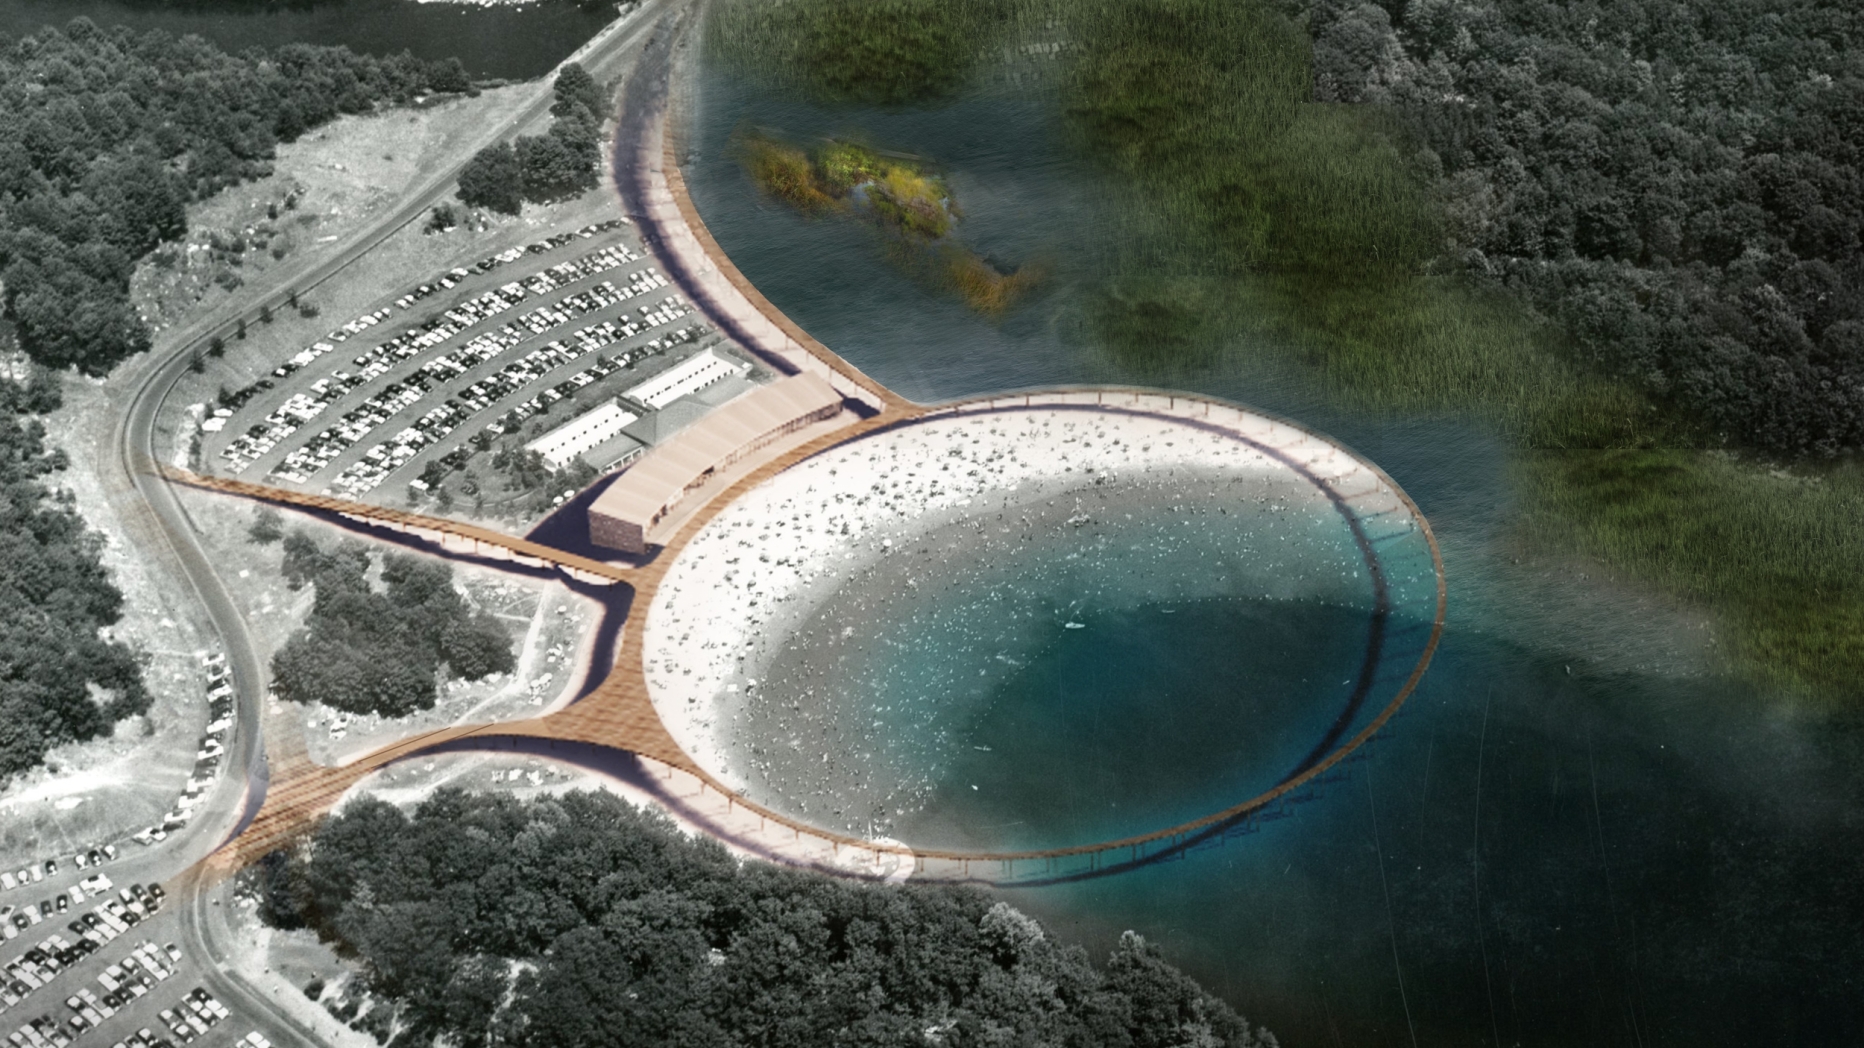 A conceptual rendering of a bathhouse designed for Lake Sebago.